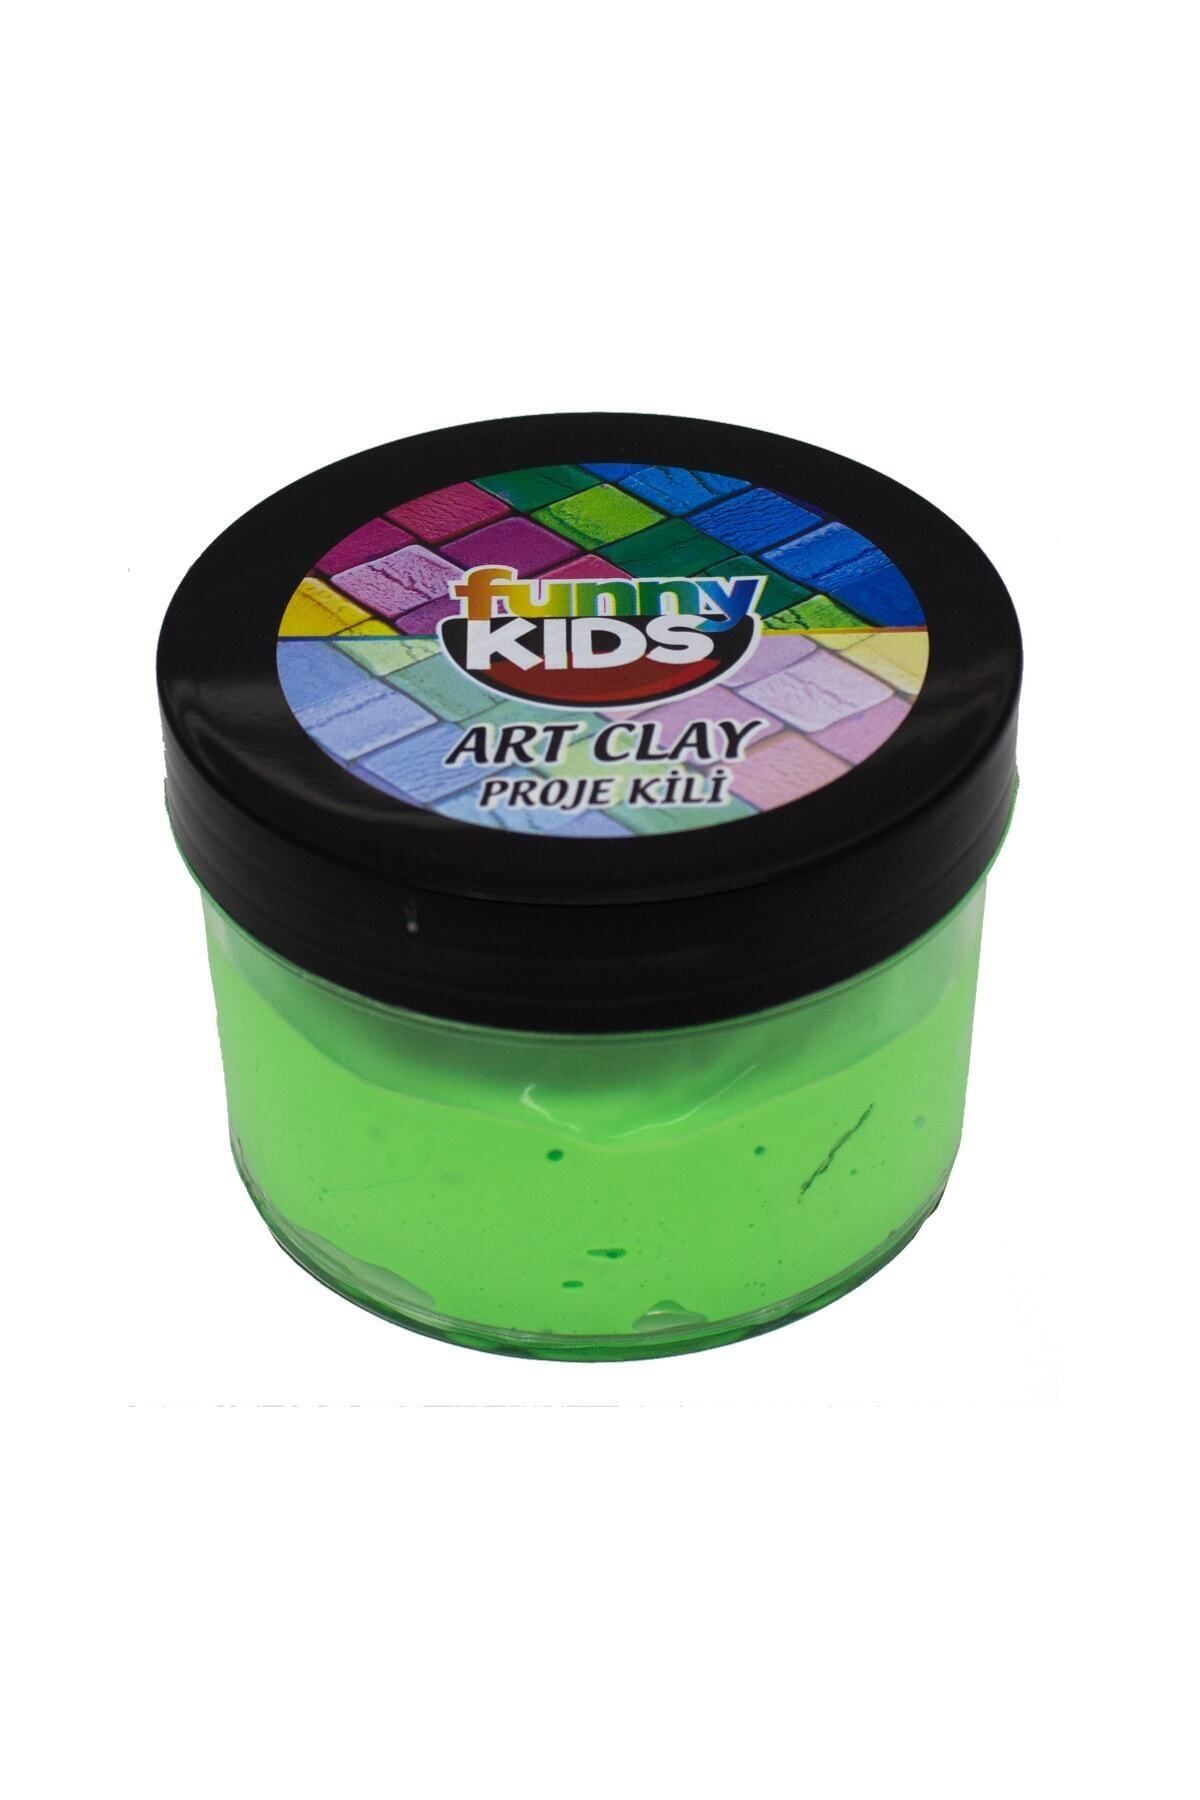 Rich Funny Kids Art Clay Proje Kili 40cc - Neon Green